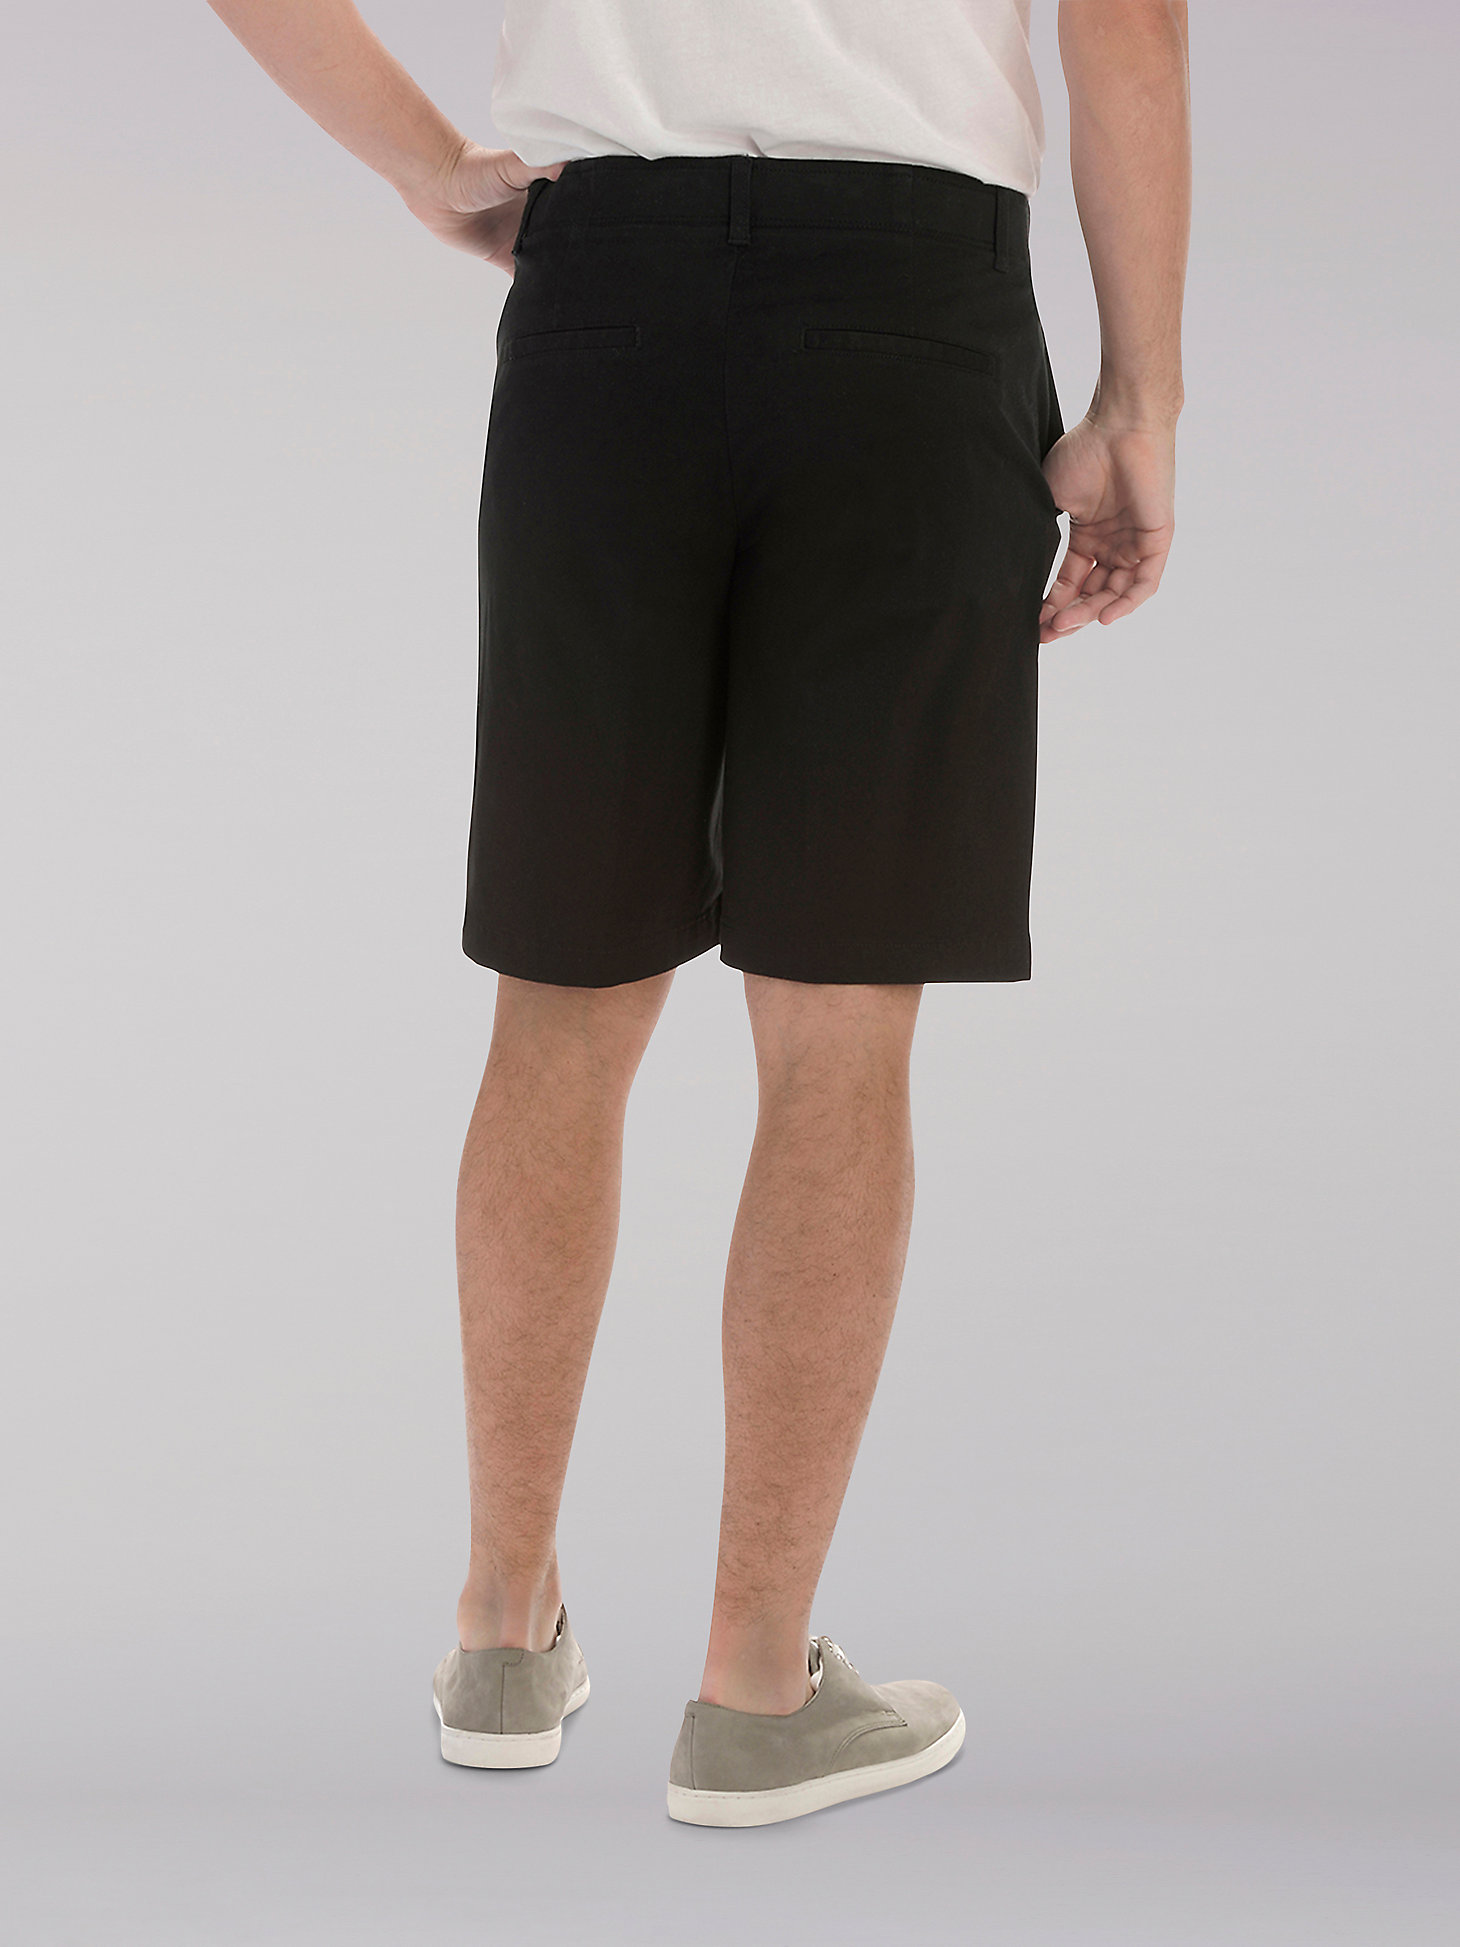 Men’s Extreme Comfort Short (Big&Tall) in Black alternative view 1